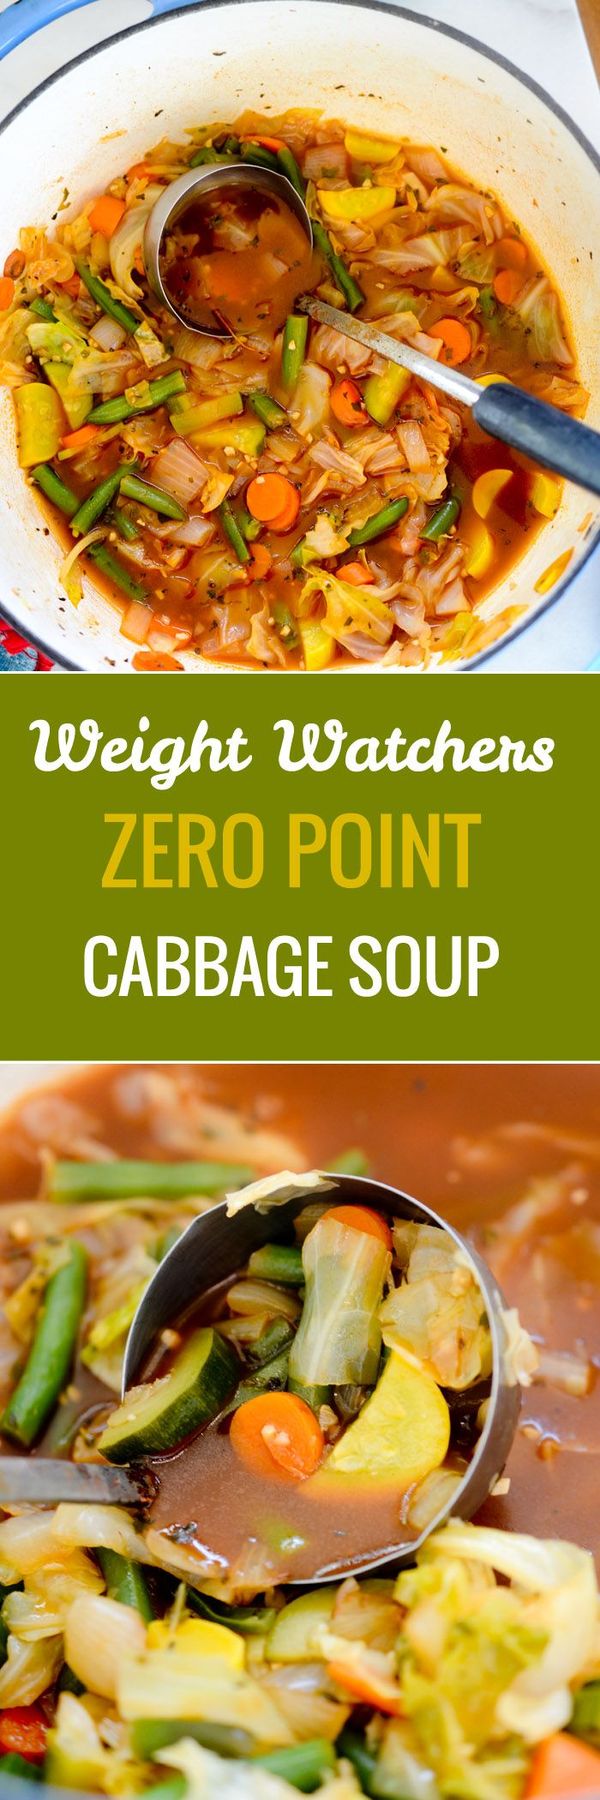 Weight Watchers Zero Point Cabbage Soup